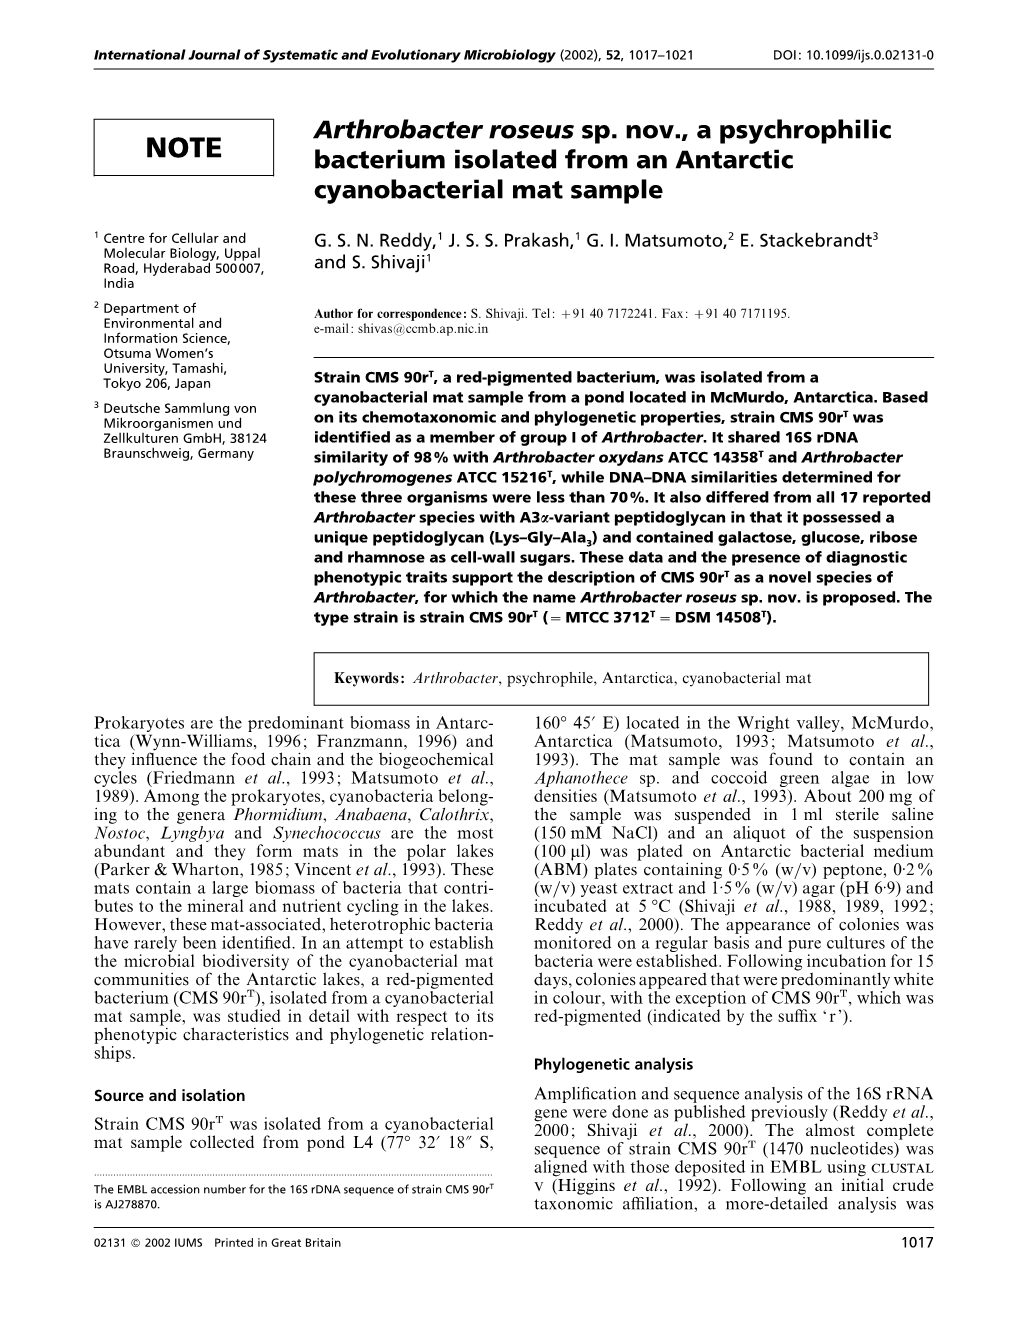 Arthrobacter Roseus Sp. Nov., a Psychrophilic Bacterium Isolated from an Antarctic Cyanobacterial Mat Sample